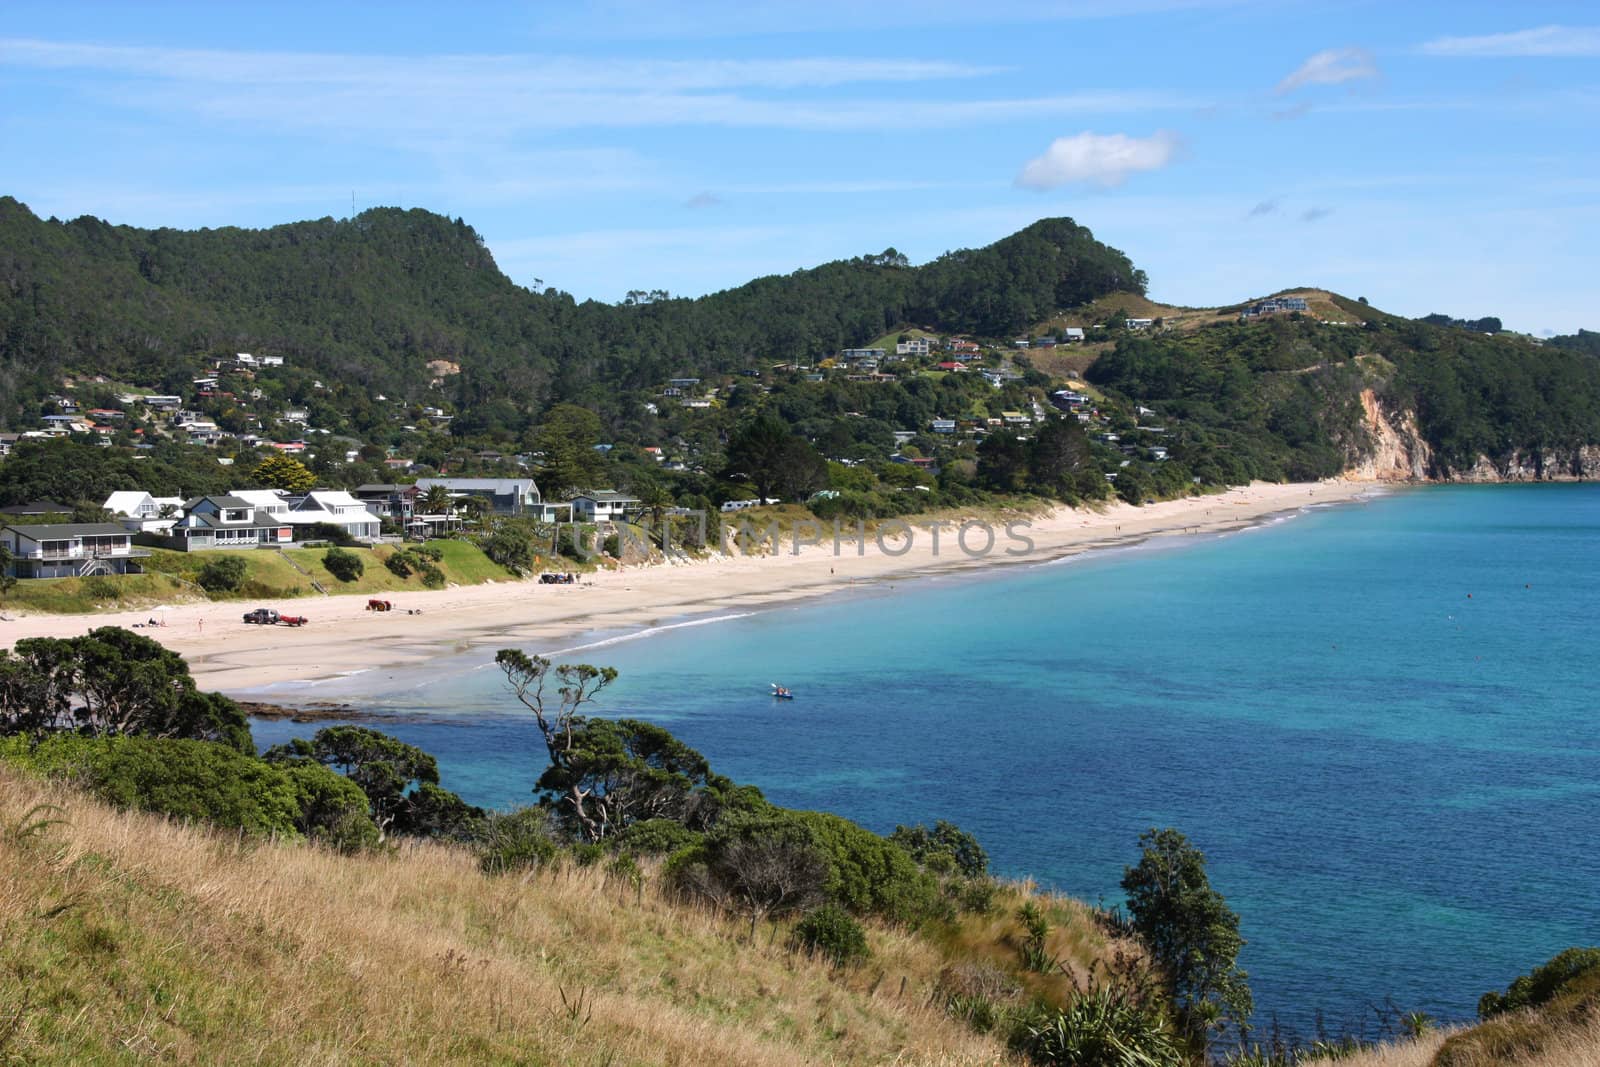 Hahei Beach in Coromandel peninsula. New Zealand - North Island.